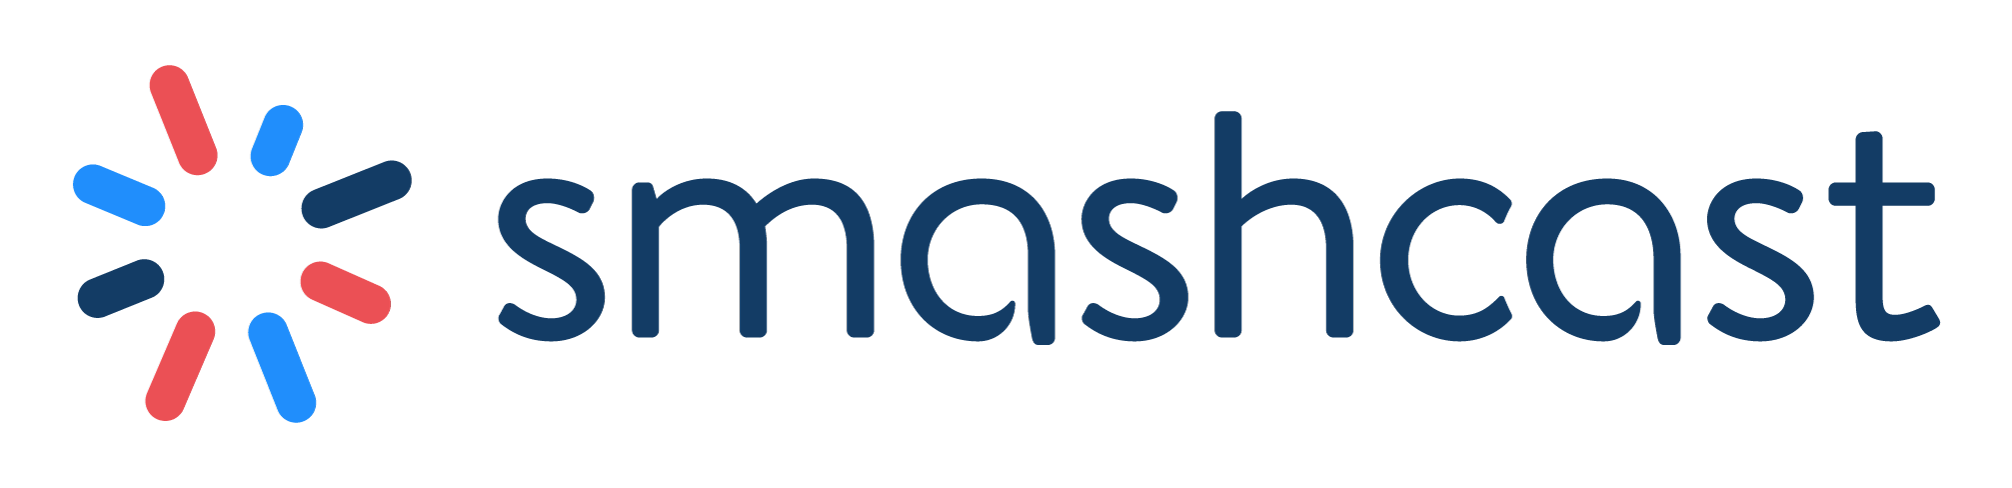 Smashcast Logo - Hitbox and Azubu to Relaunch as Smashcast Emerging as the World's ...